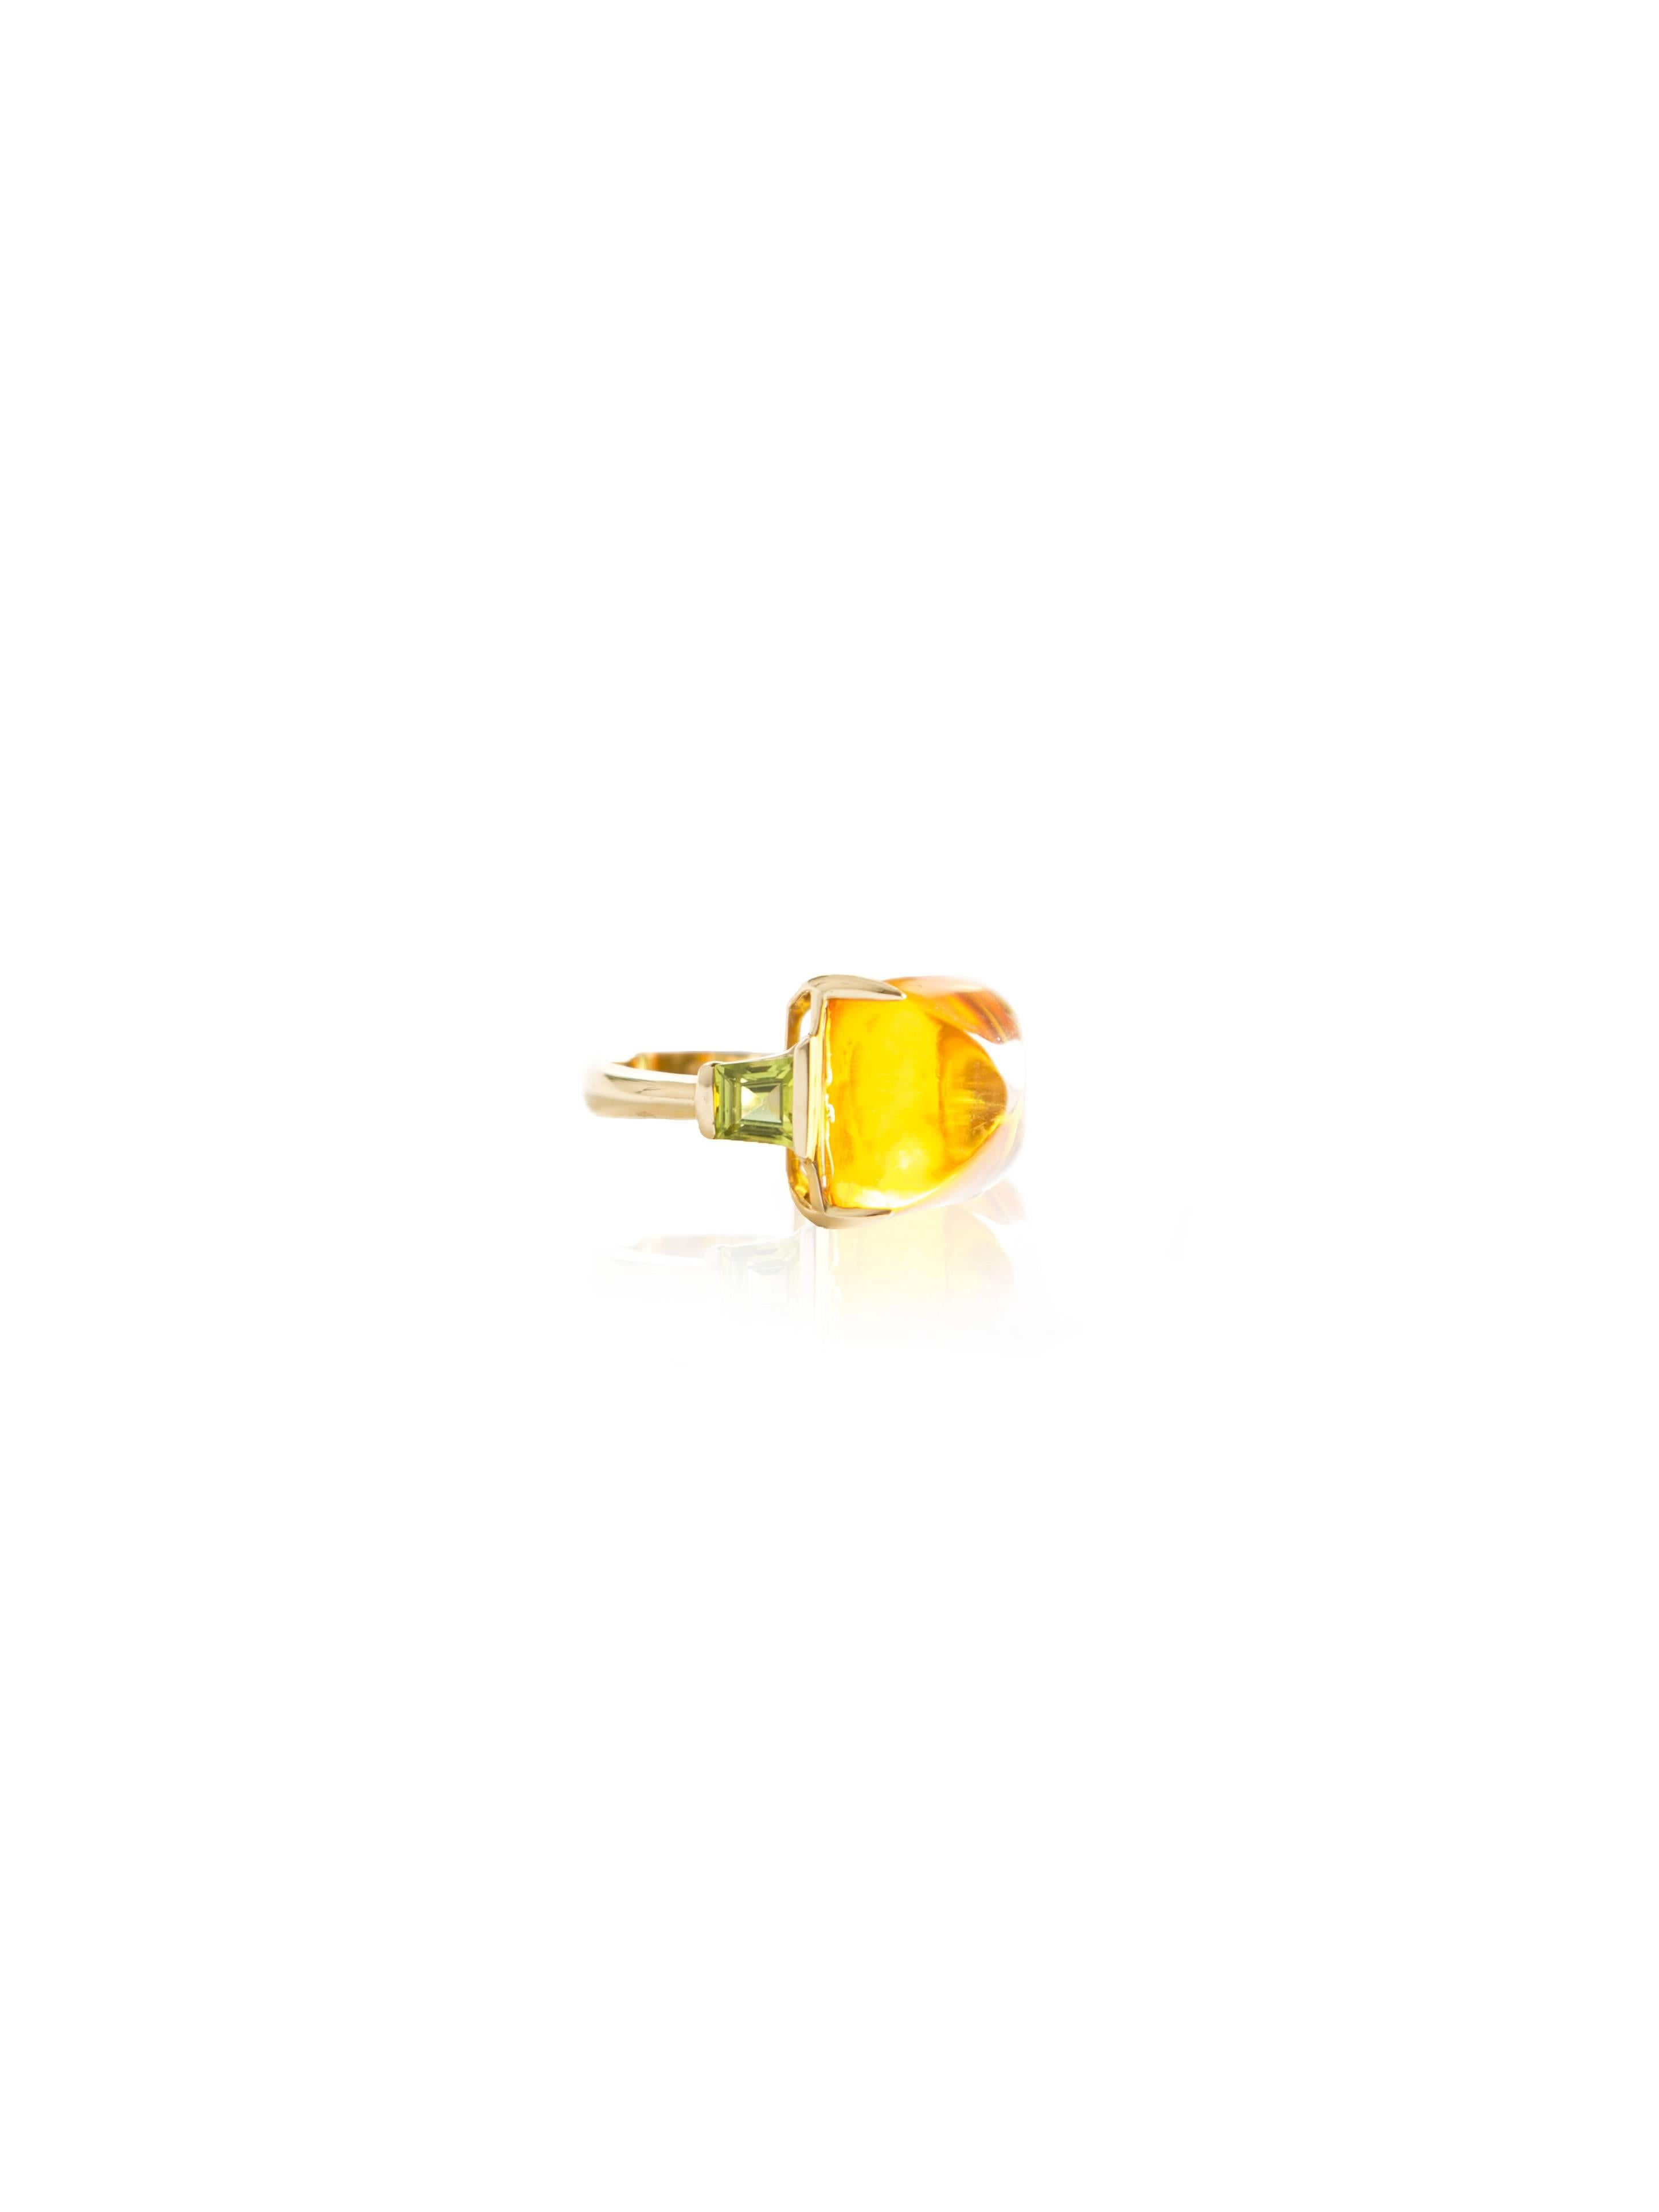 Amber Peridot Yellow Gold Ring by Opera, Italian Attitude For Sale 1